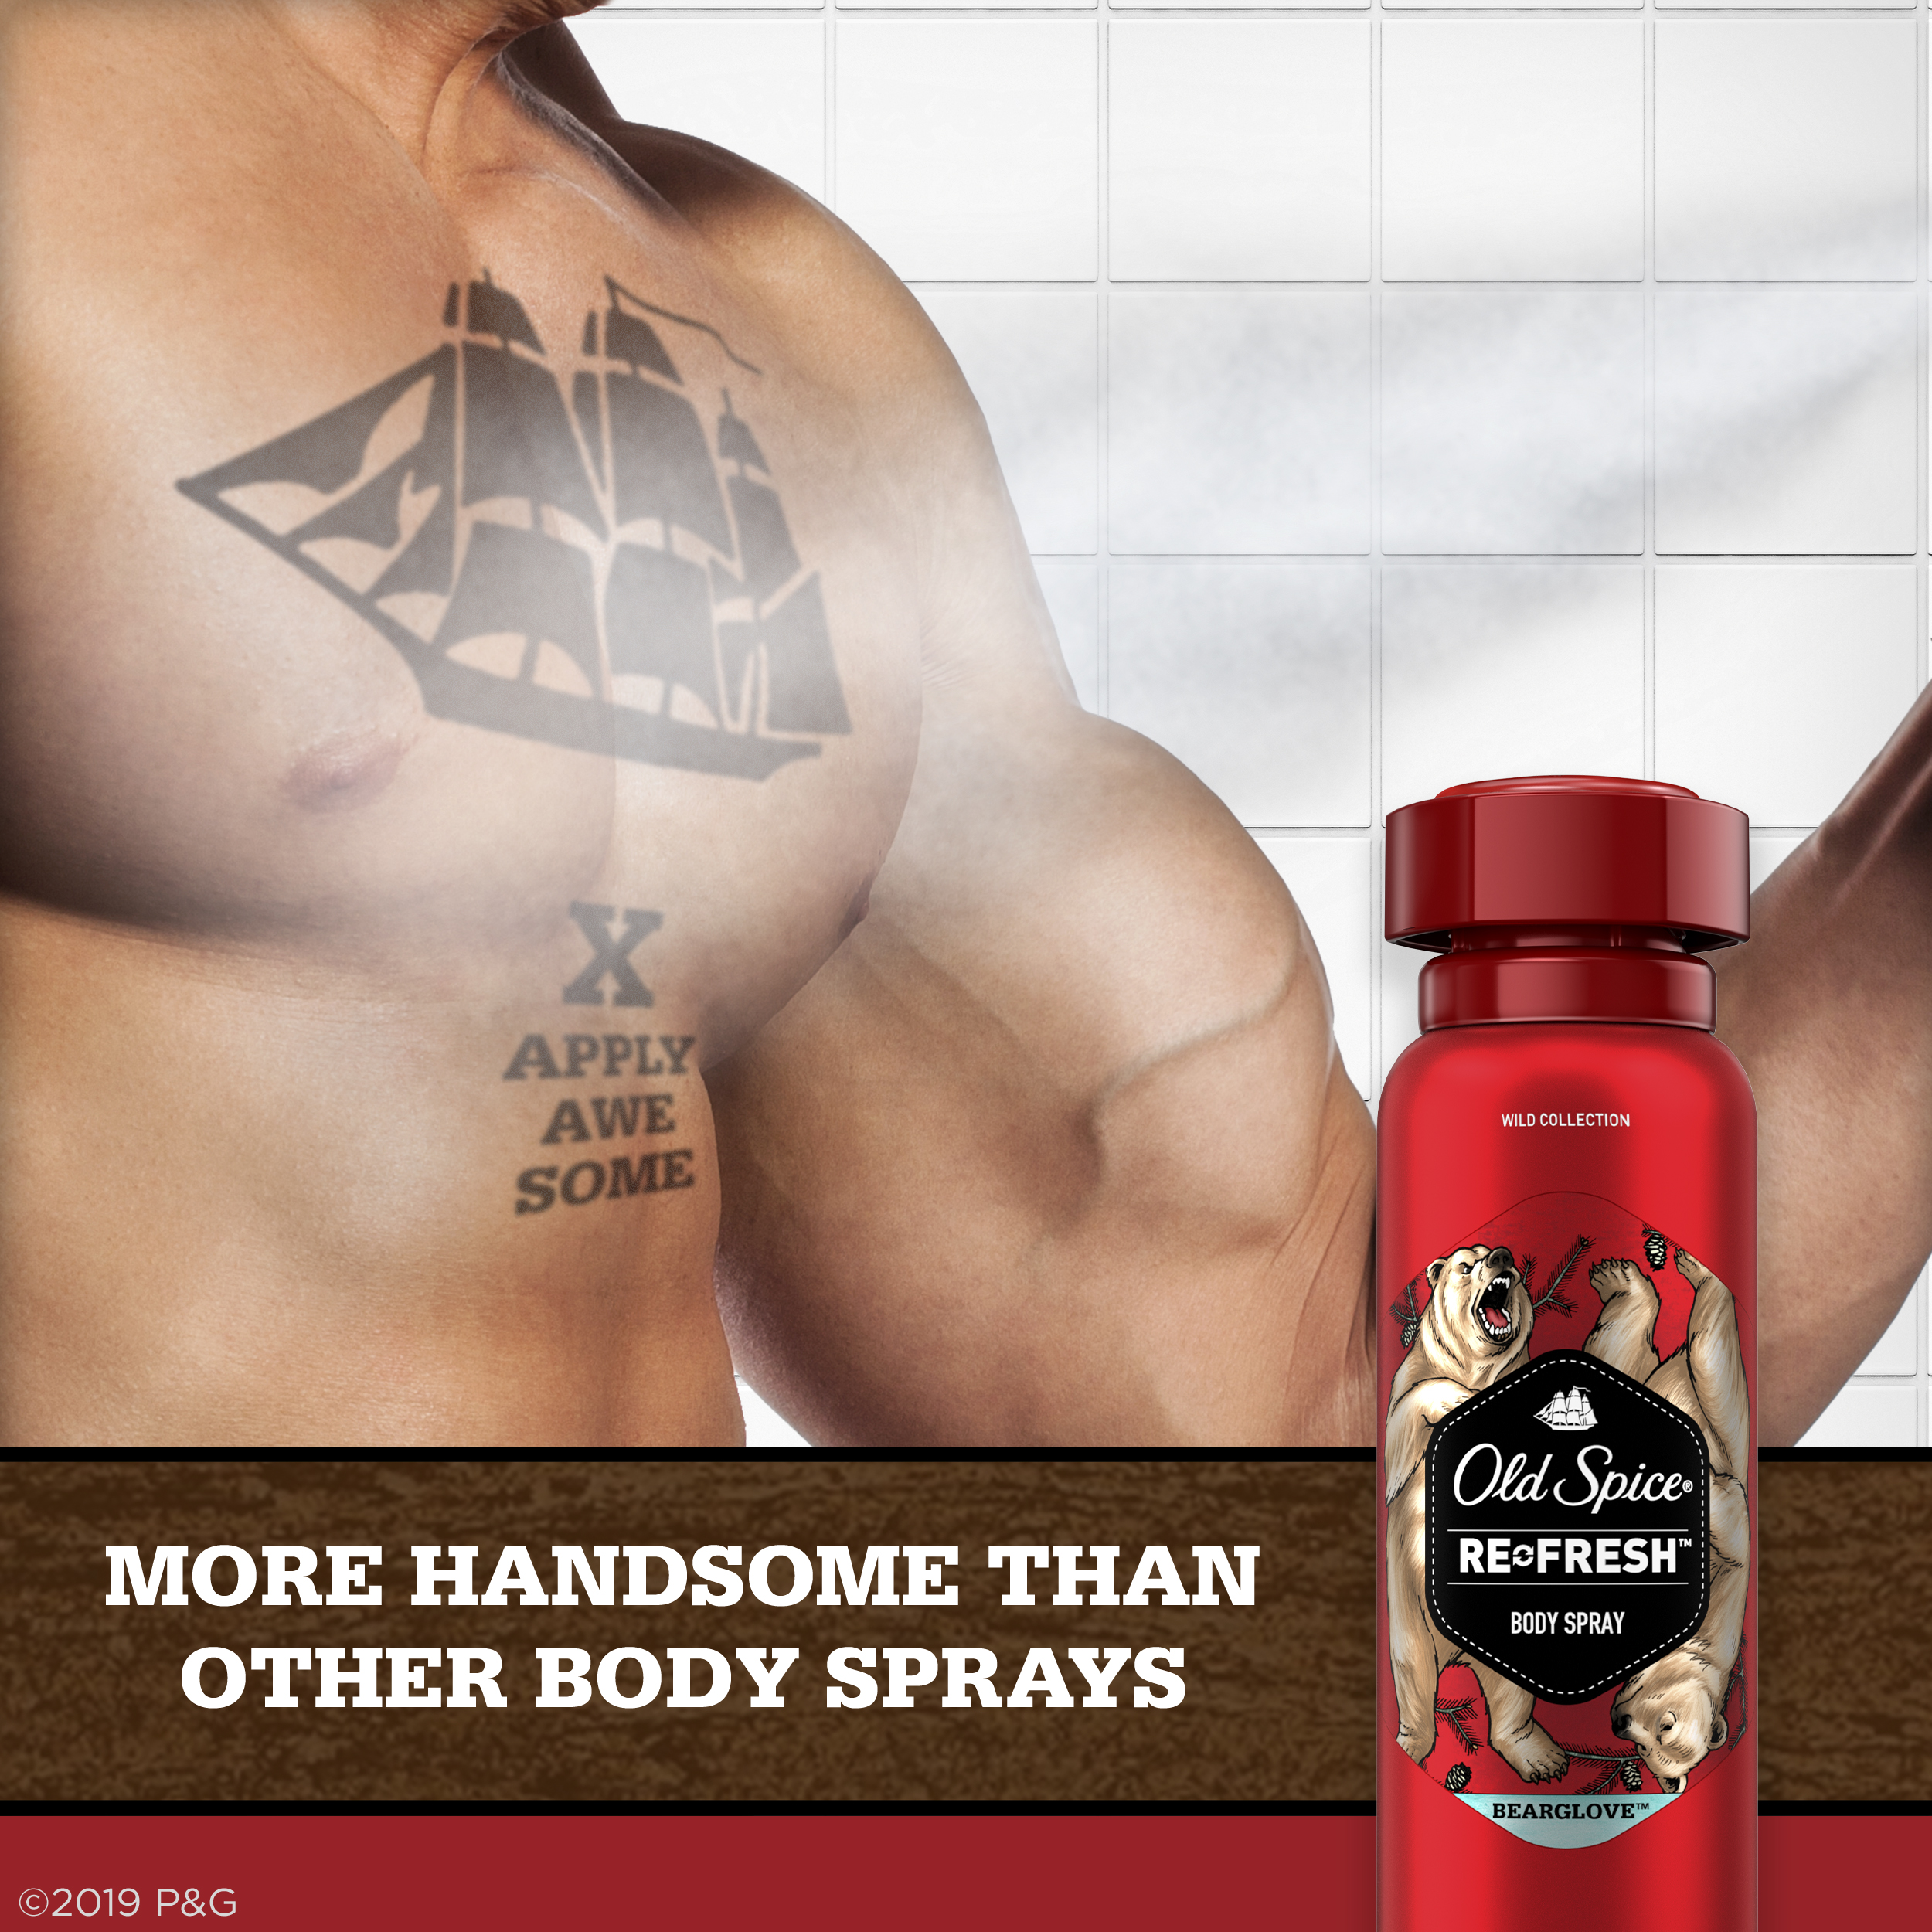 Old Spice Bearglove Body Spray for Men, 3.75 Oz - image 4 of 6